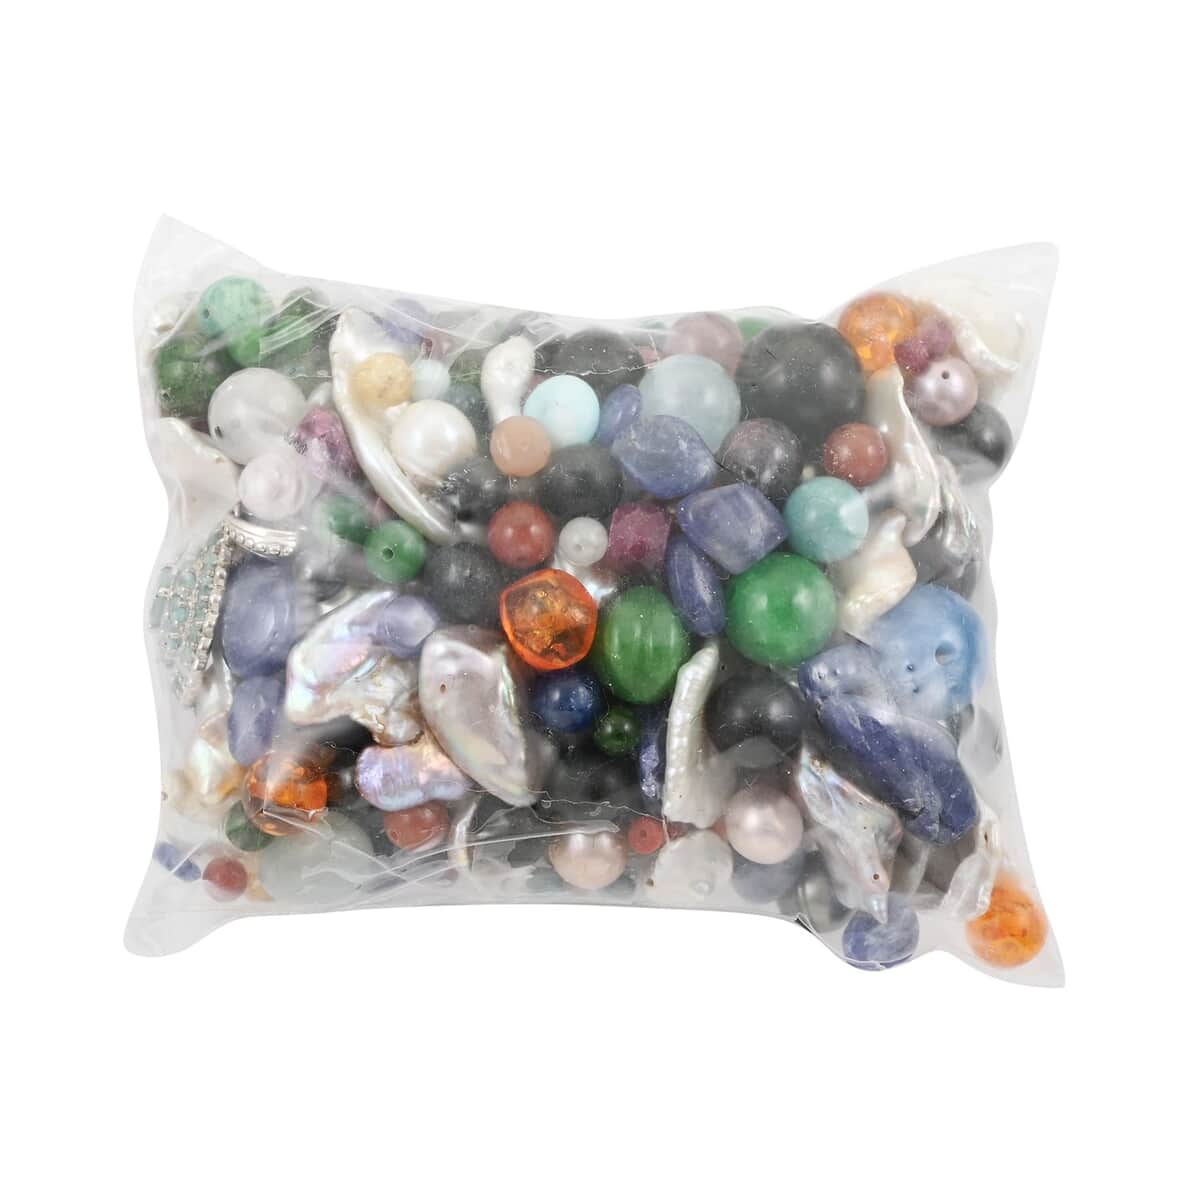 Assorted Loose Beads 1 lbs Bag Loose Gemstone image number 0